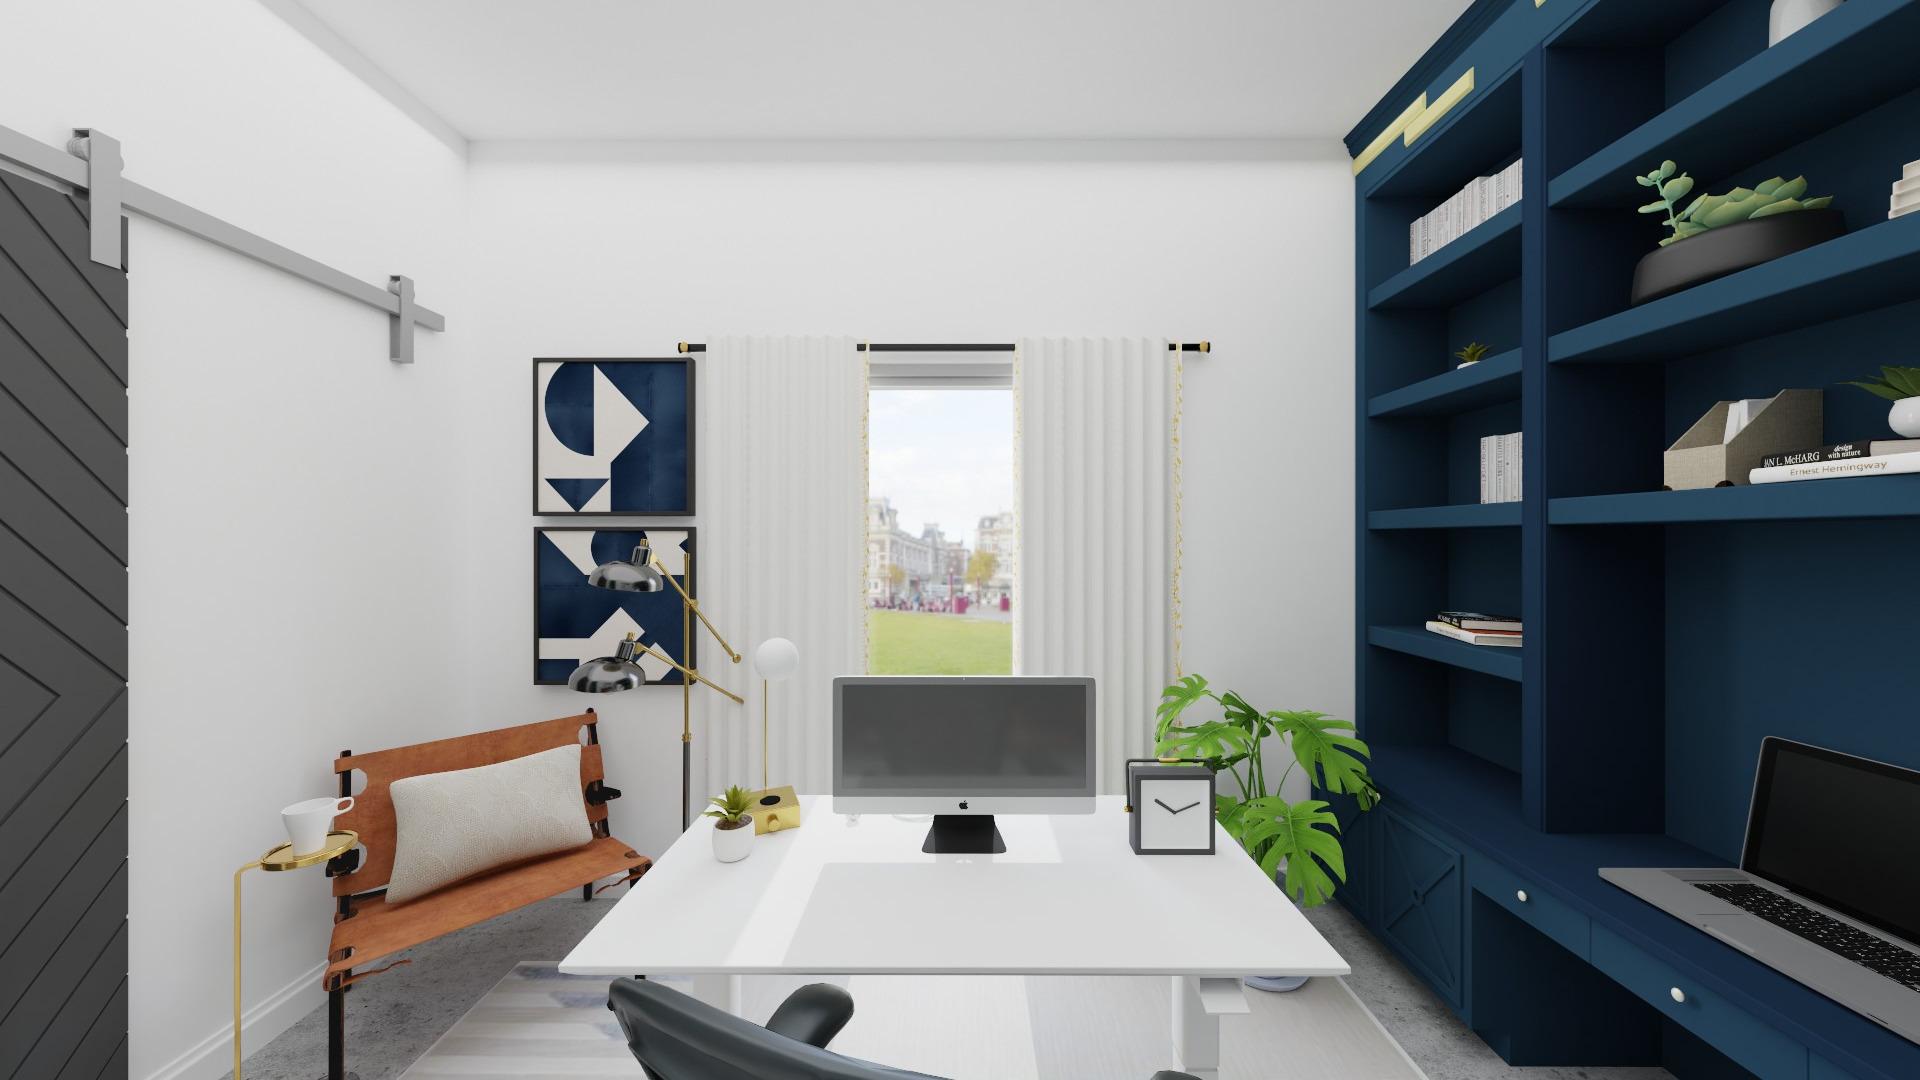  A Modern Home Office Design Featuring Peacock Blue Shelving